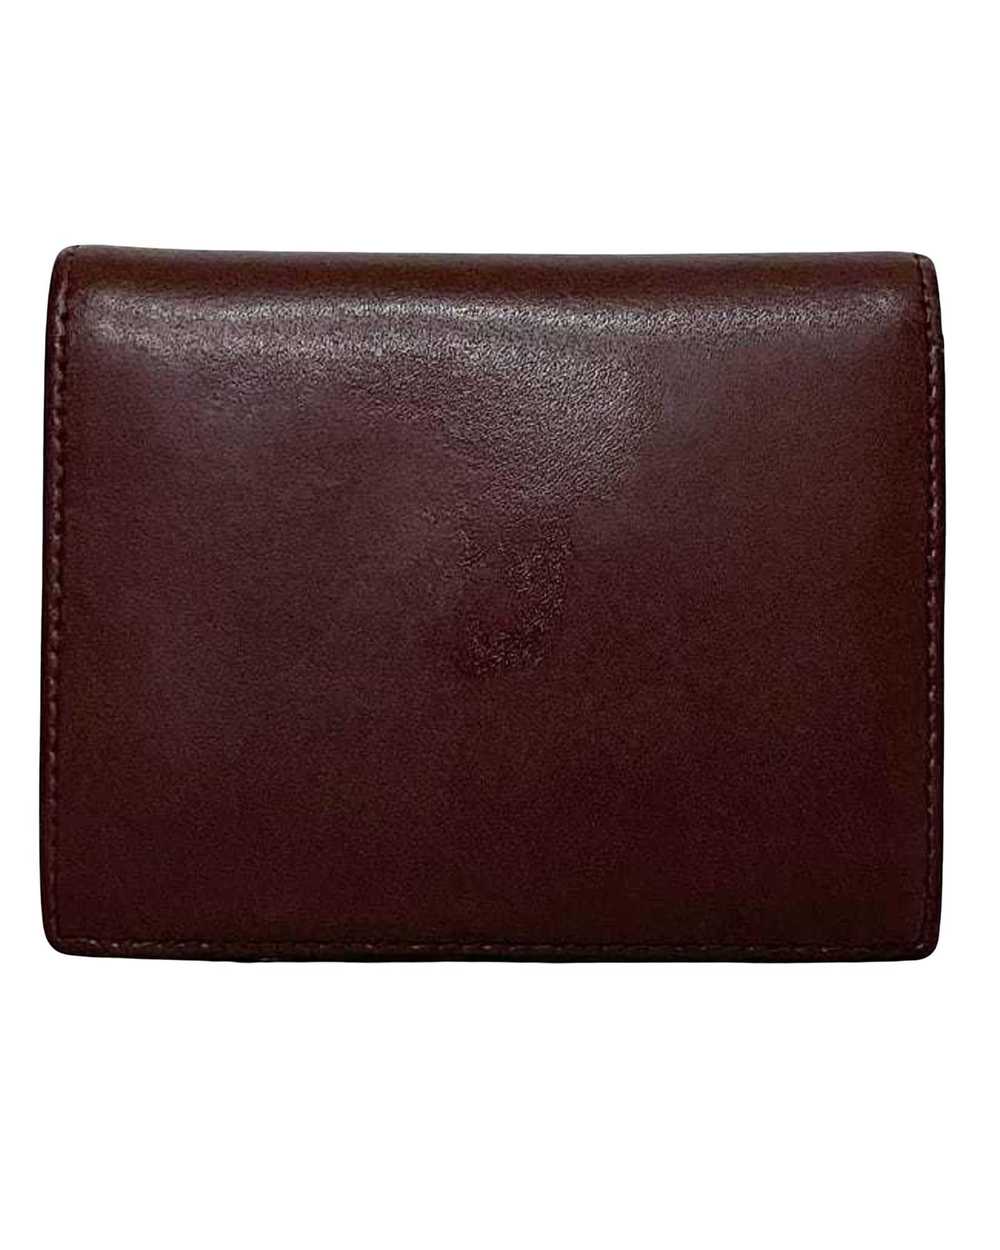 Fendi Burgundy Leather Compact Wallet - image 2